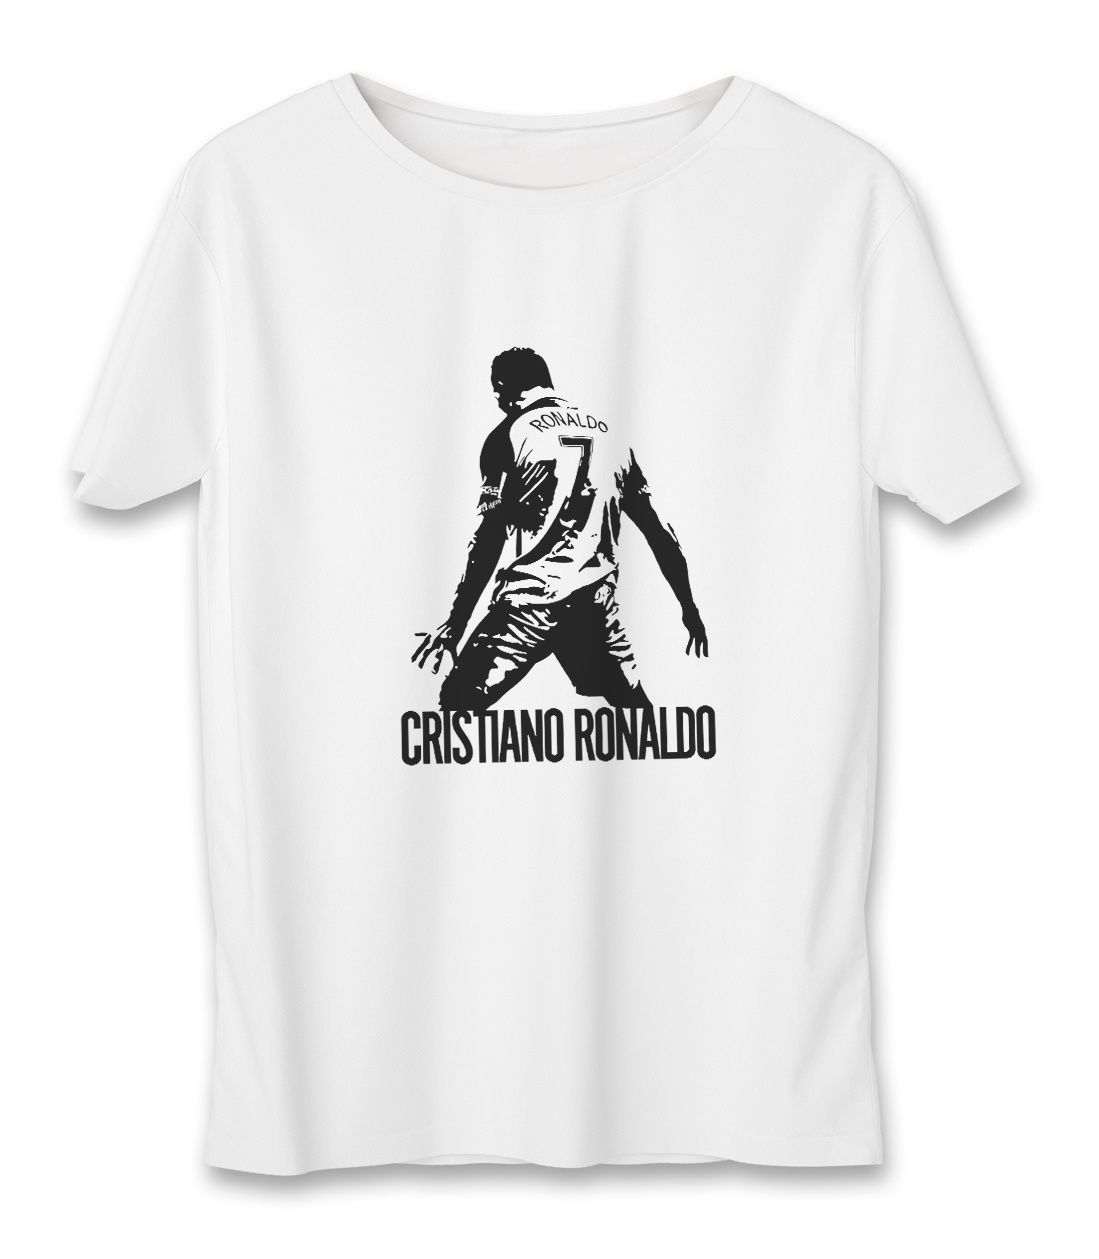 تی شرت مردانه به رسم طرح رونالدو کد 3346 -  - 1